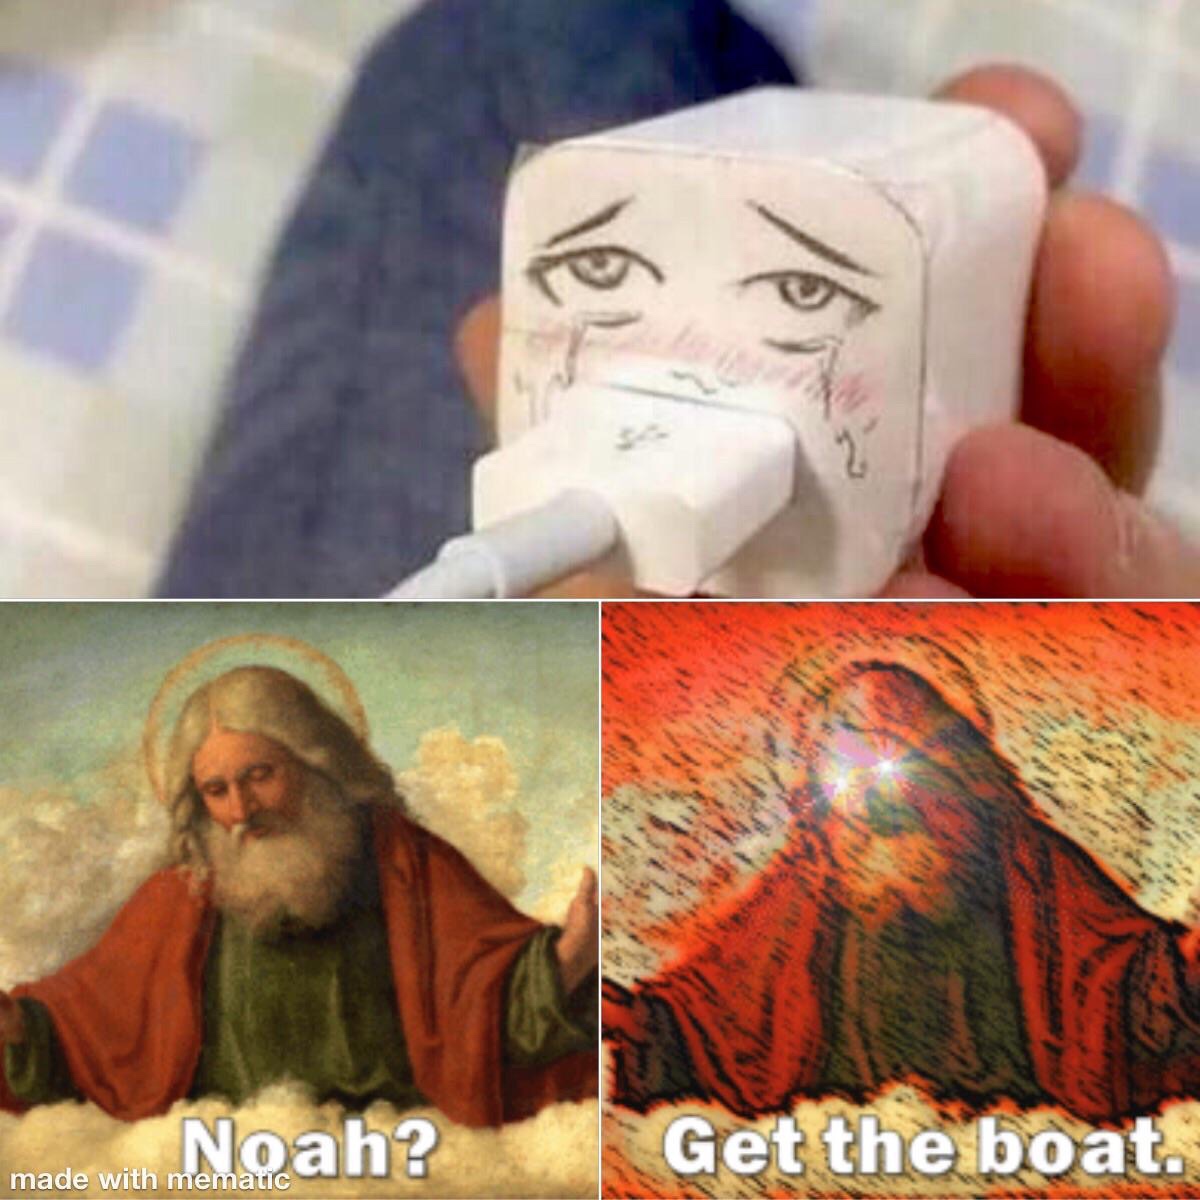 noah get the boat meme - h Noah? Get the boat. made with mematic